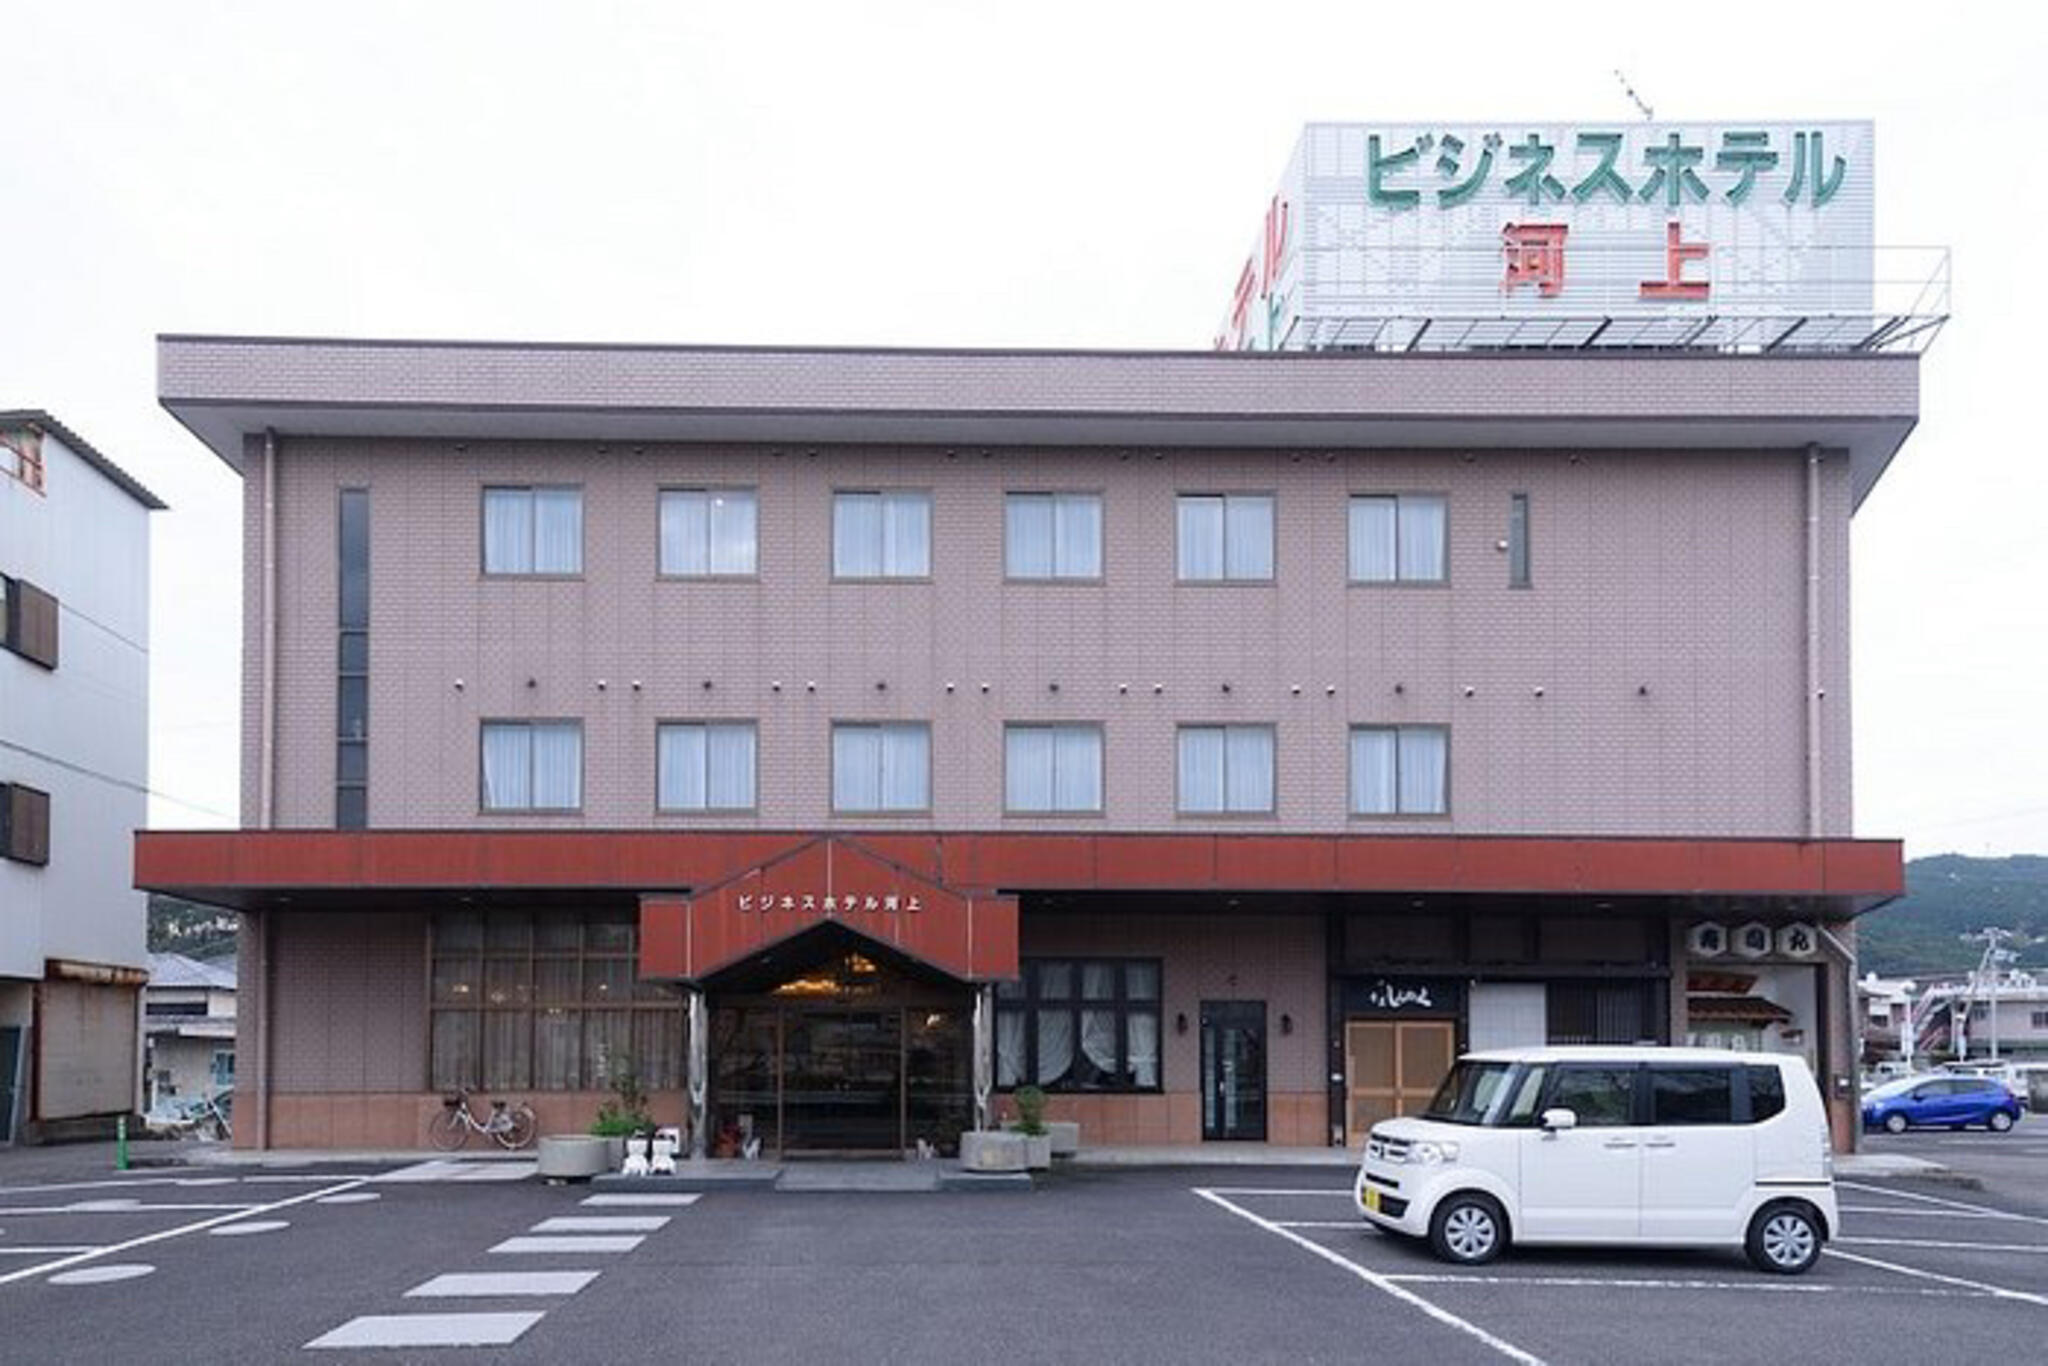 OYO ビジネスホテル河上 熊野の代表写真1